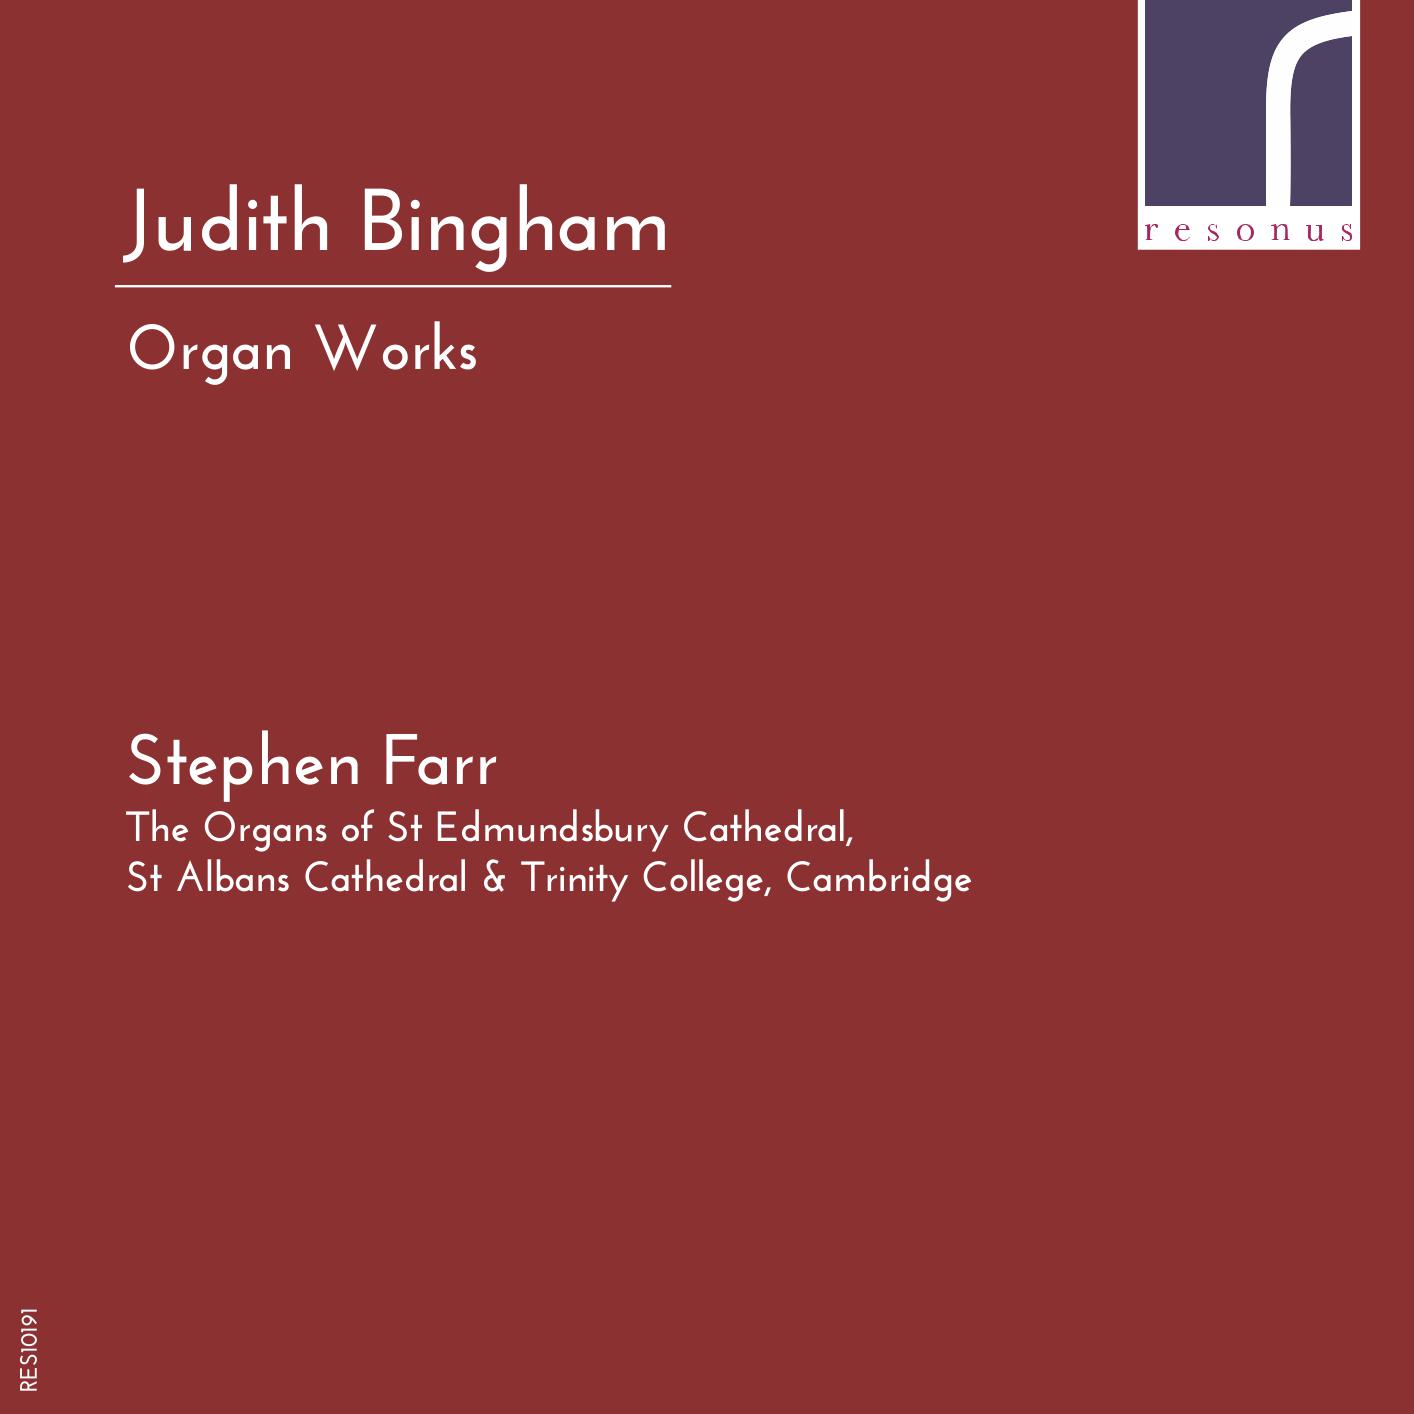 Judith Bingham